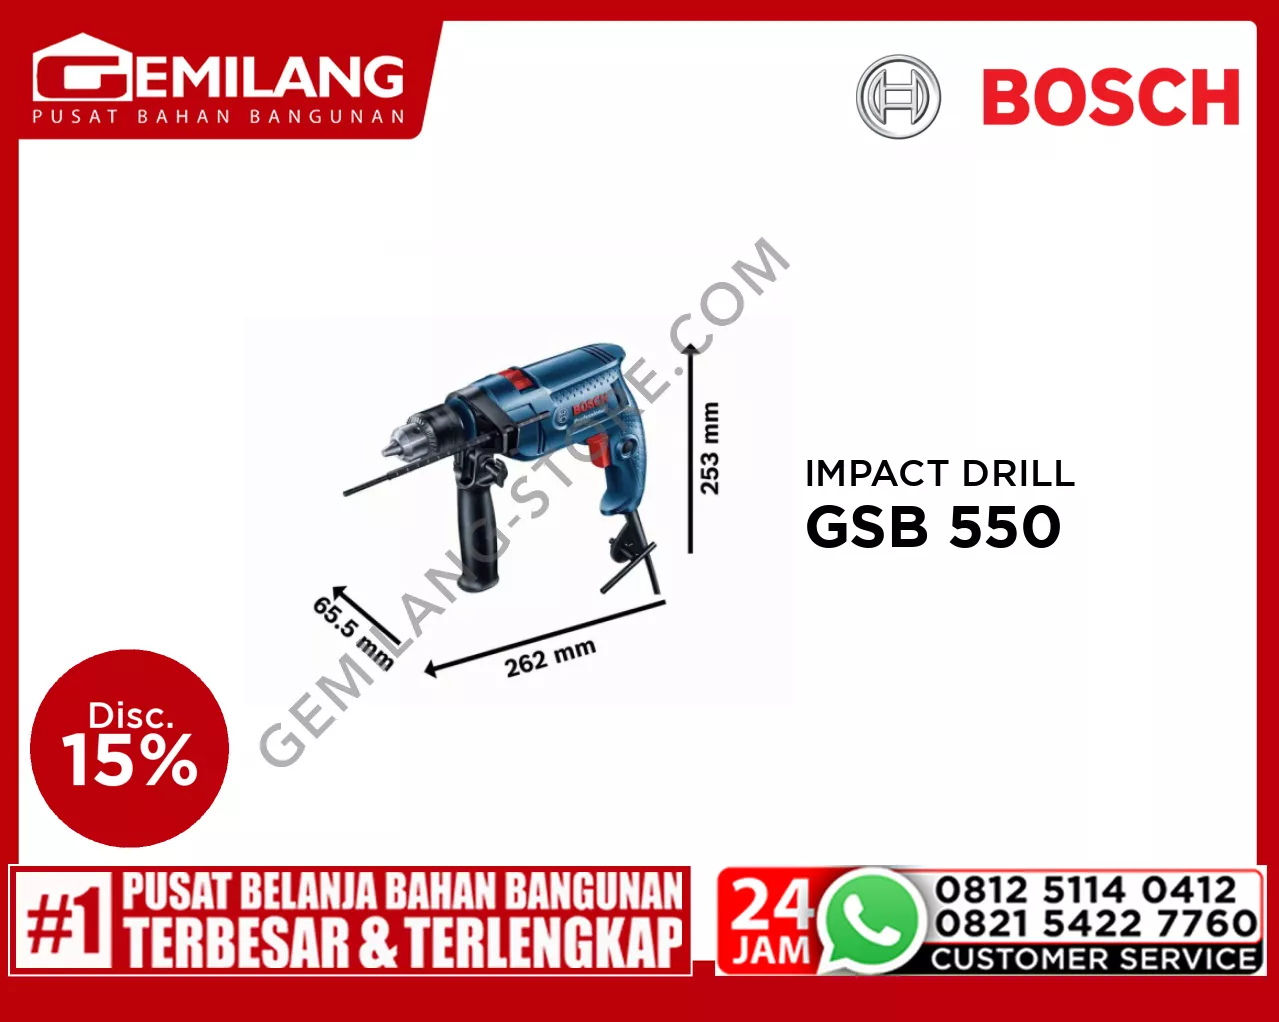 BOSCH IMPACT DRILL GSB 550